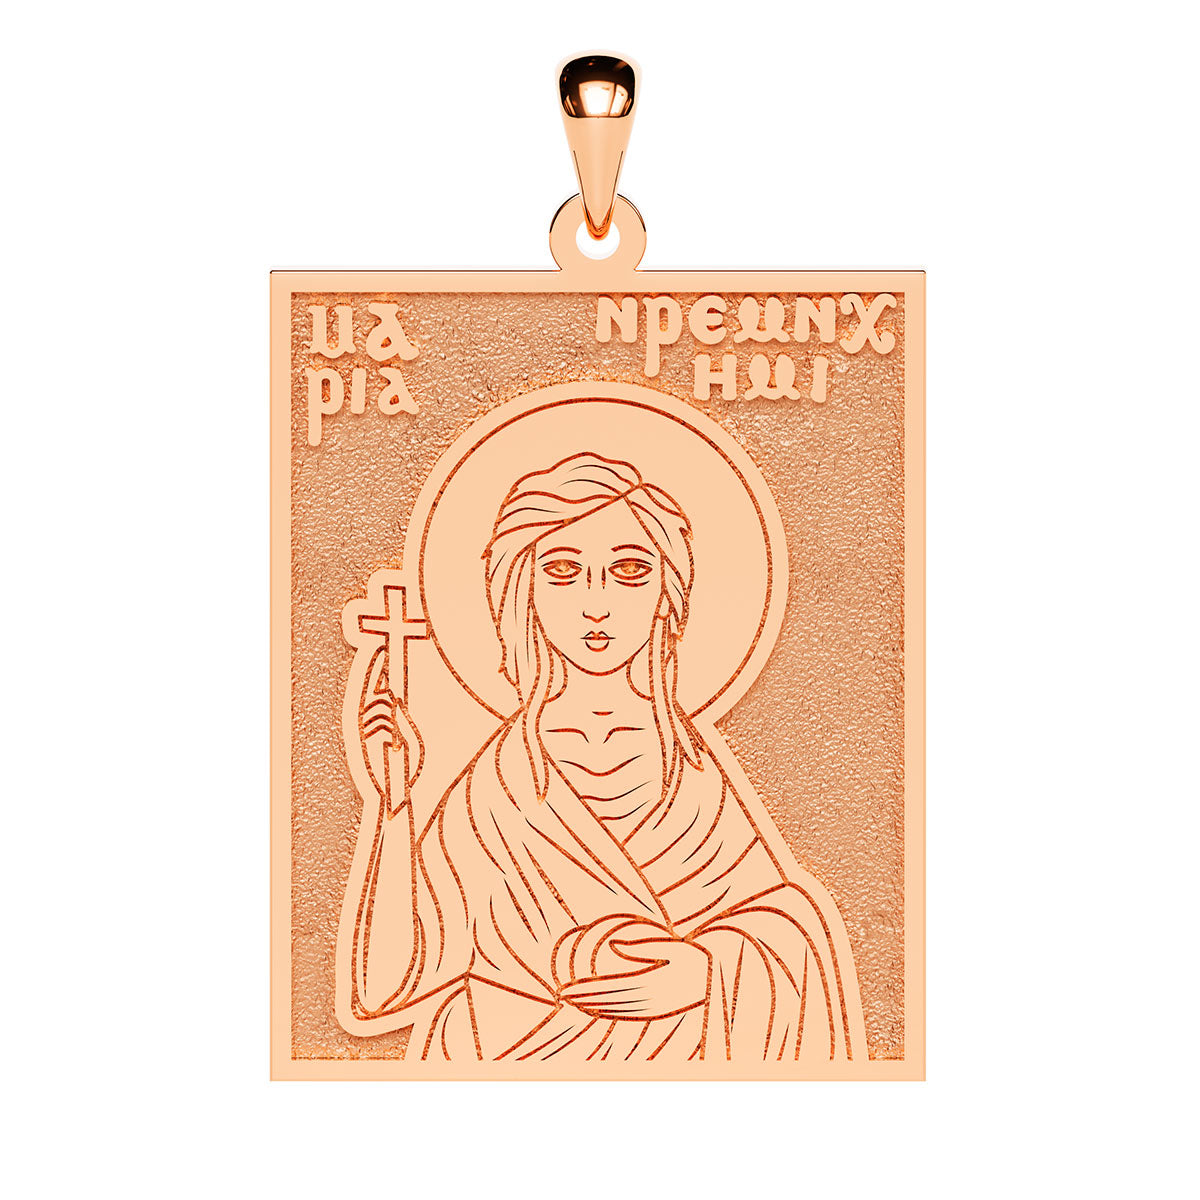 Saint Mary of Egypt Coptic Orthodox Icon Tag Medal